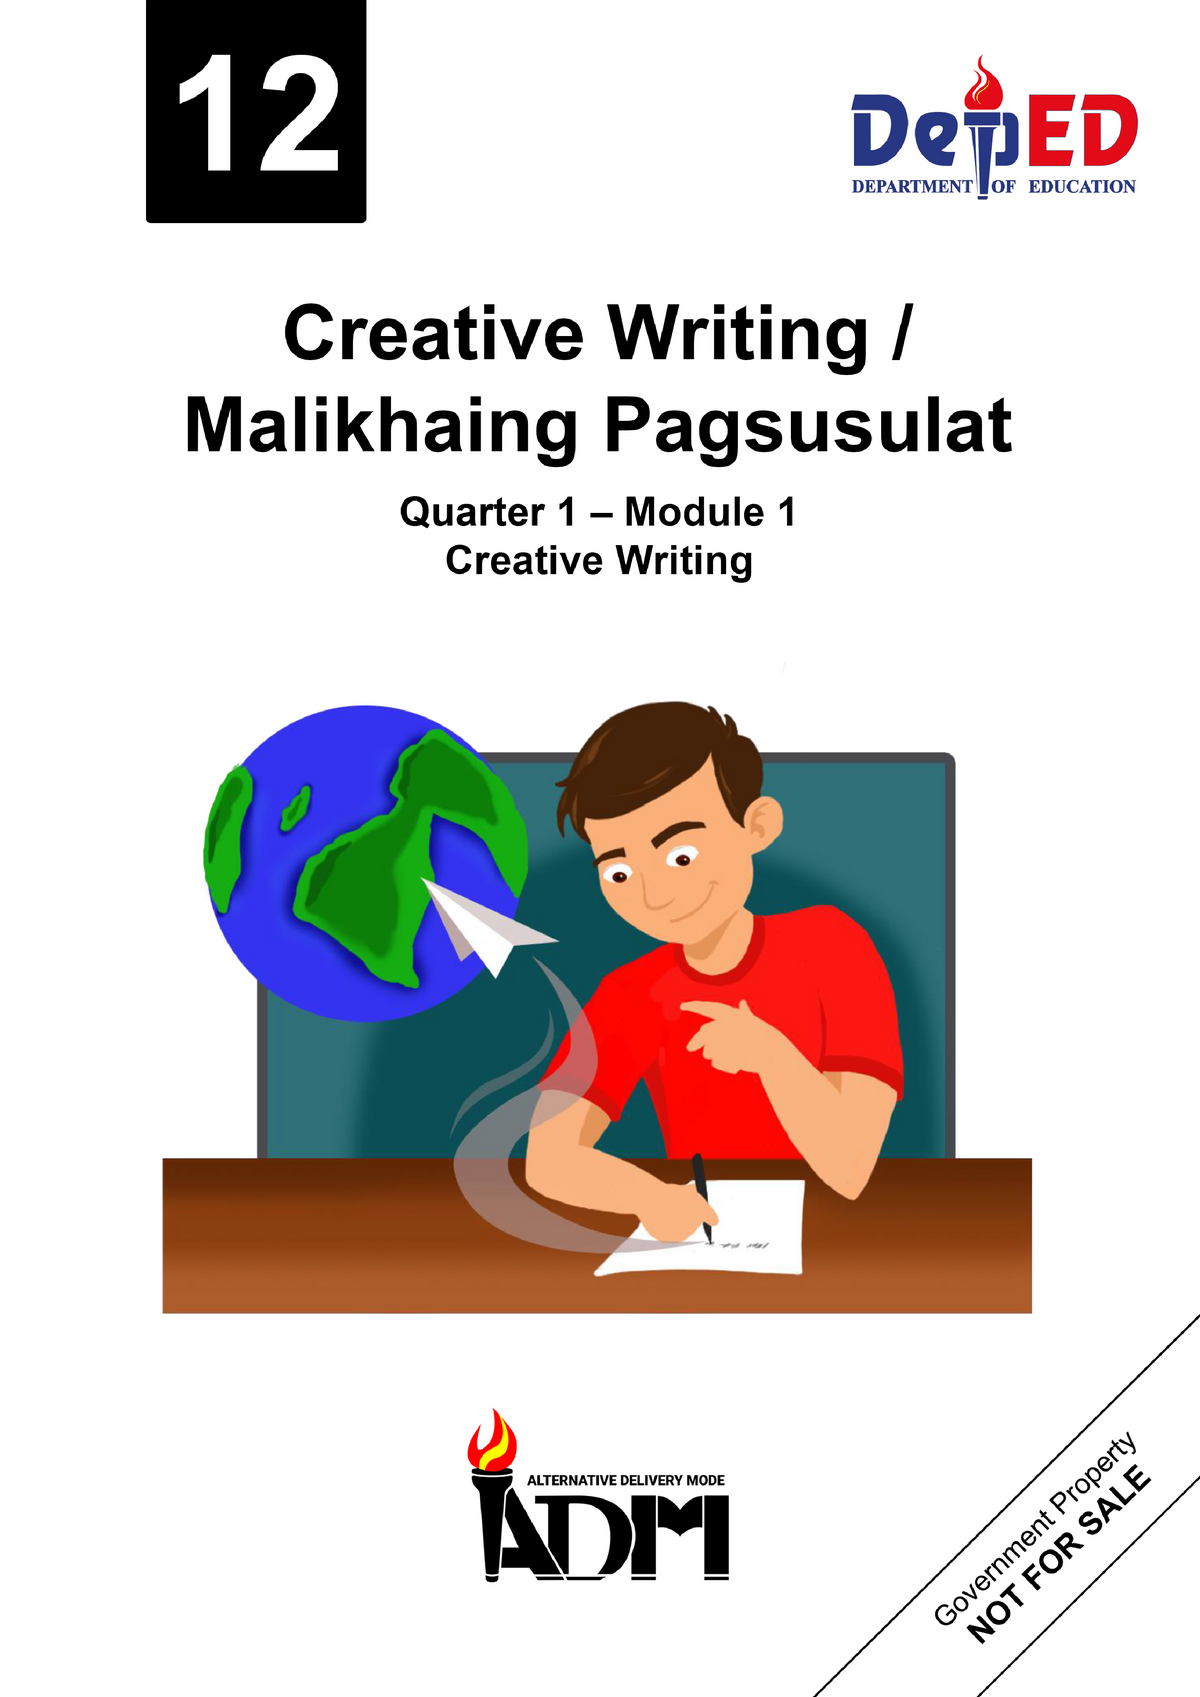 creative writing grade 12 quarter 1 module 2